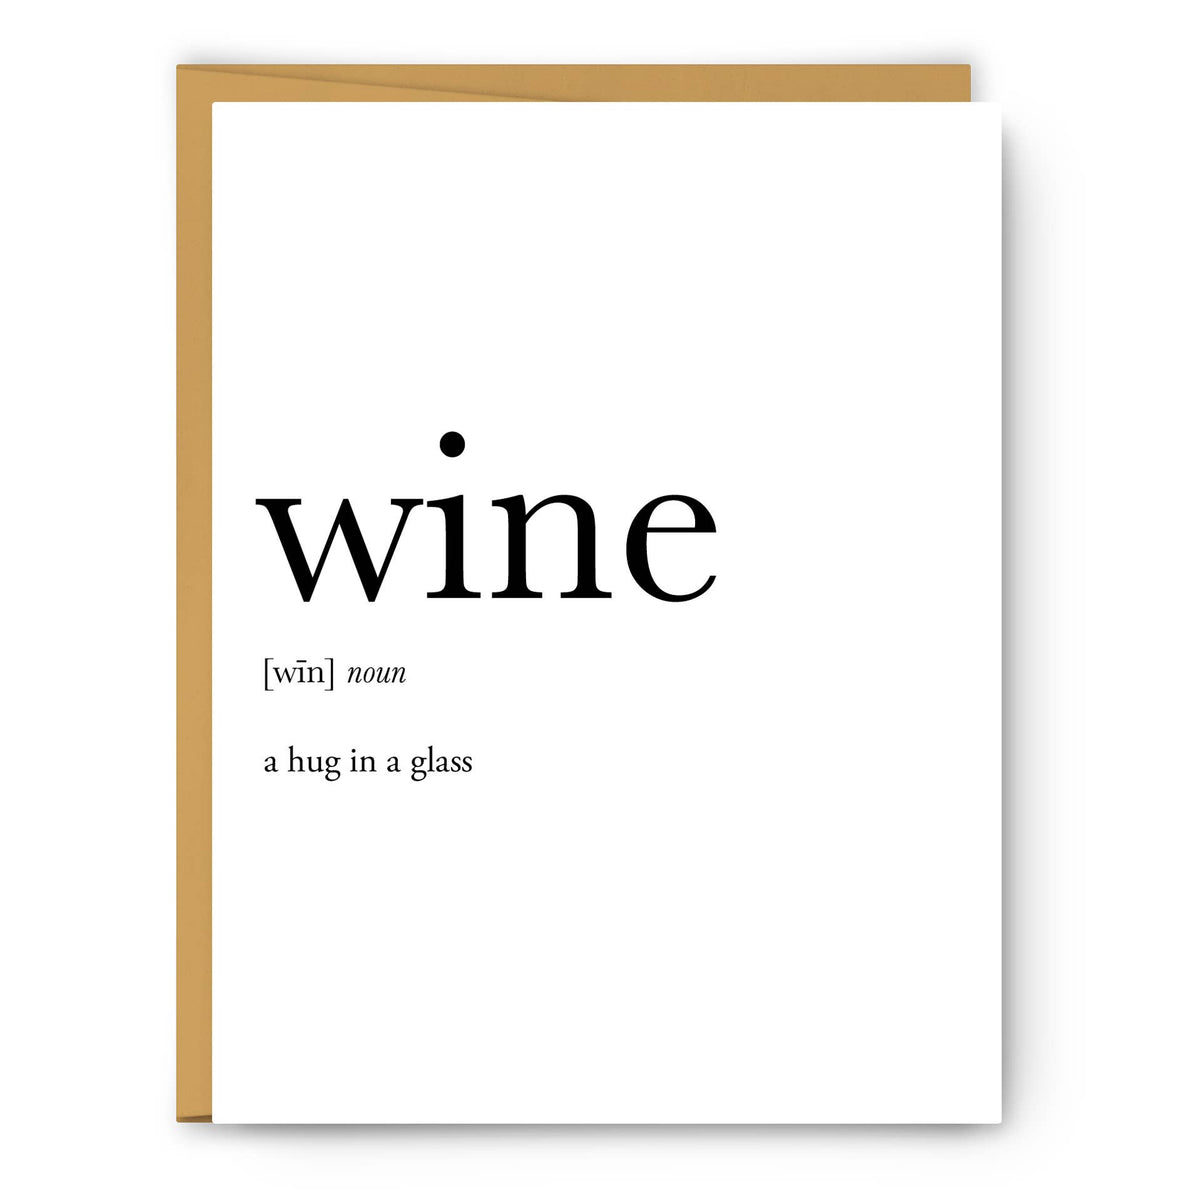 Wine Definition Card